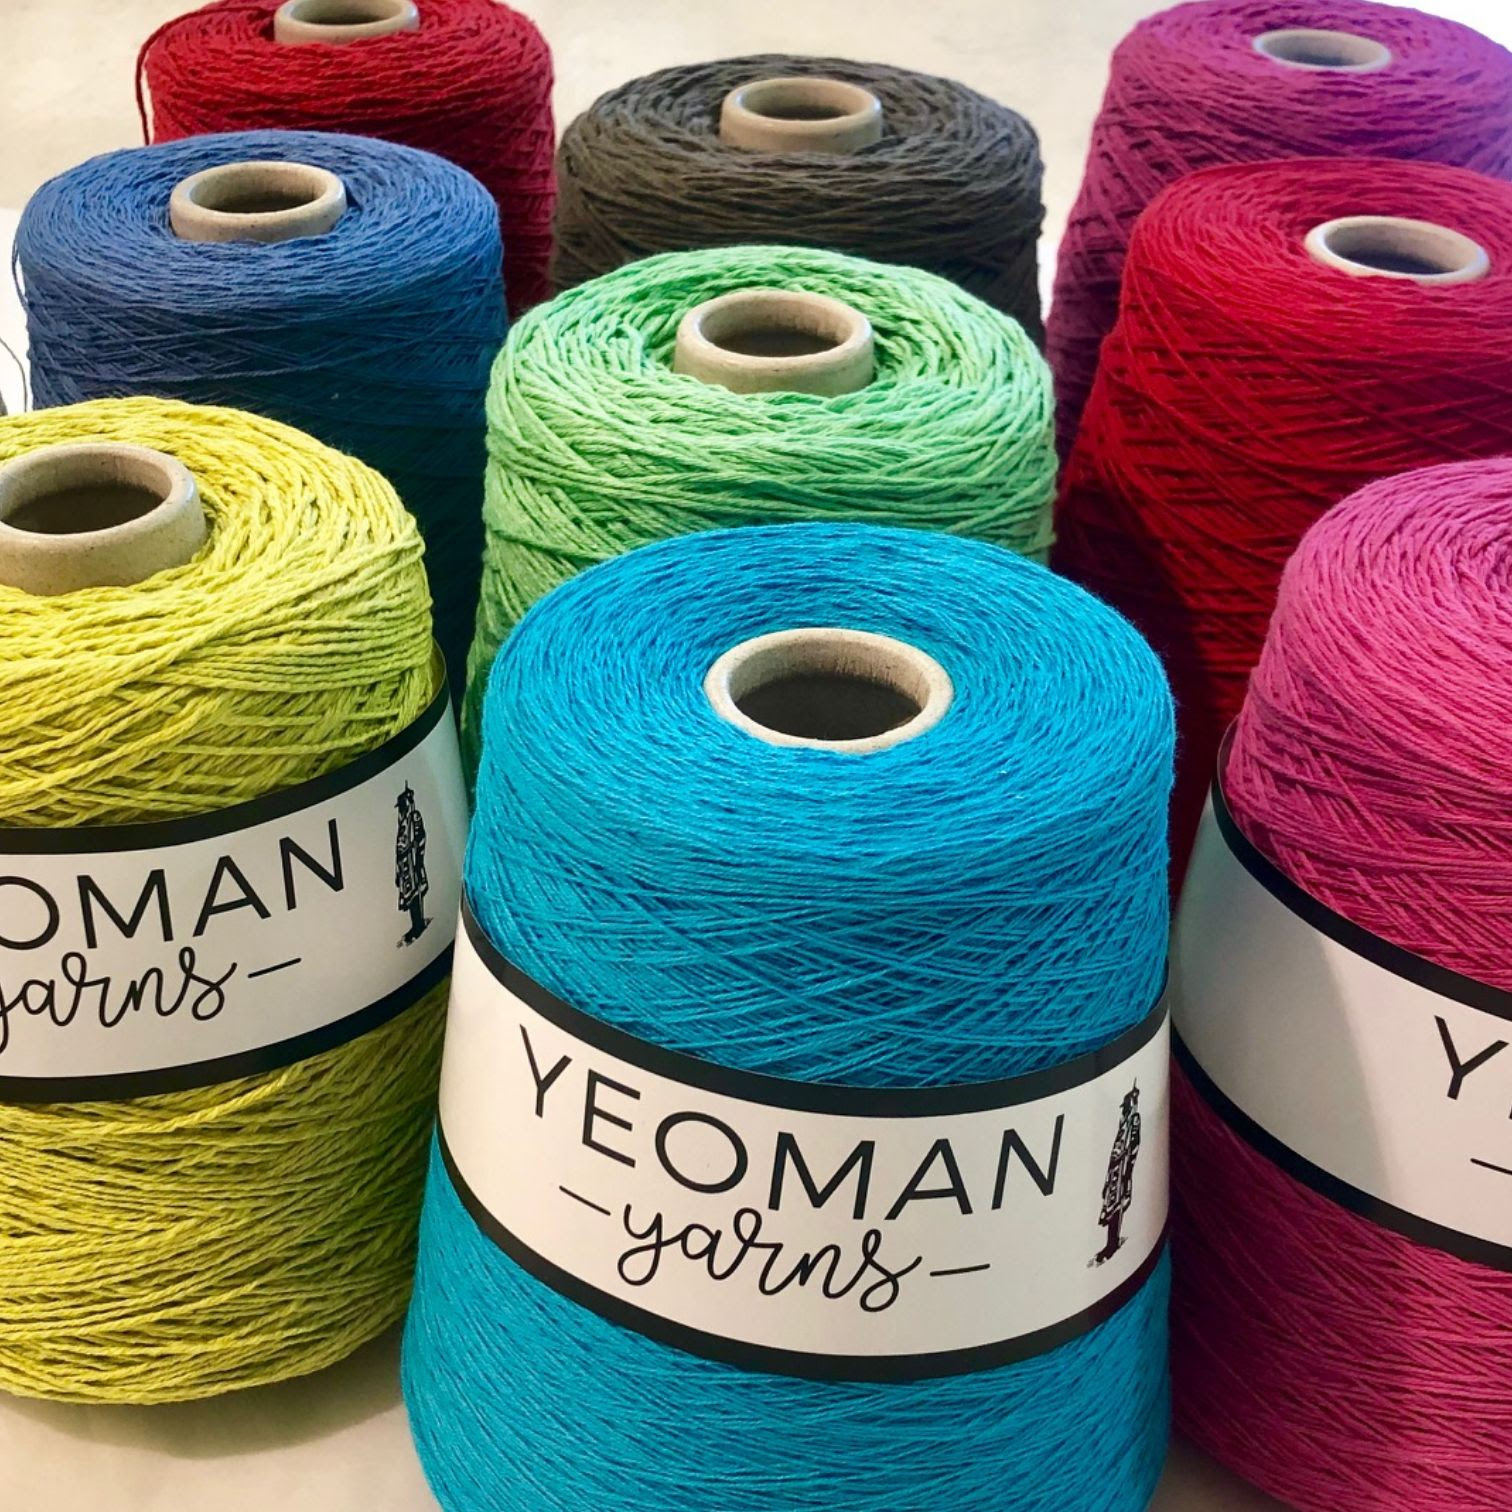 yeoman-yarns-assorted-yarn-packs-polly-knitter